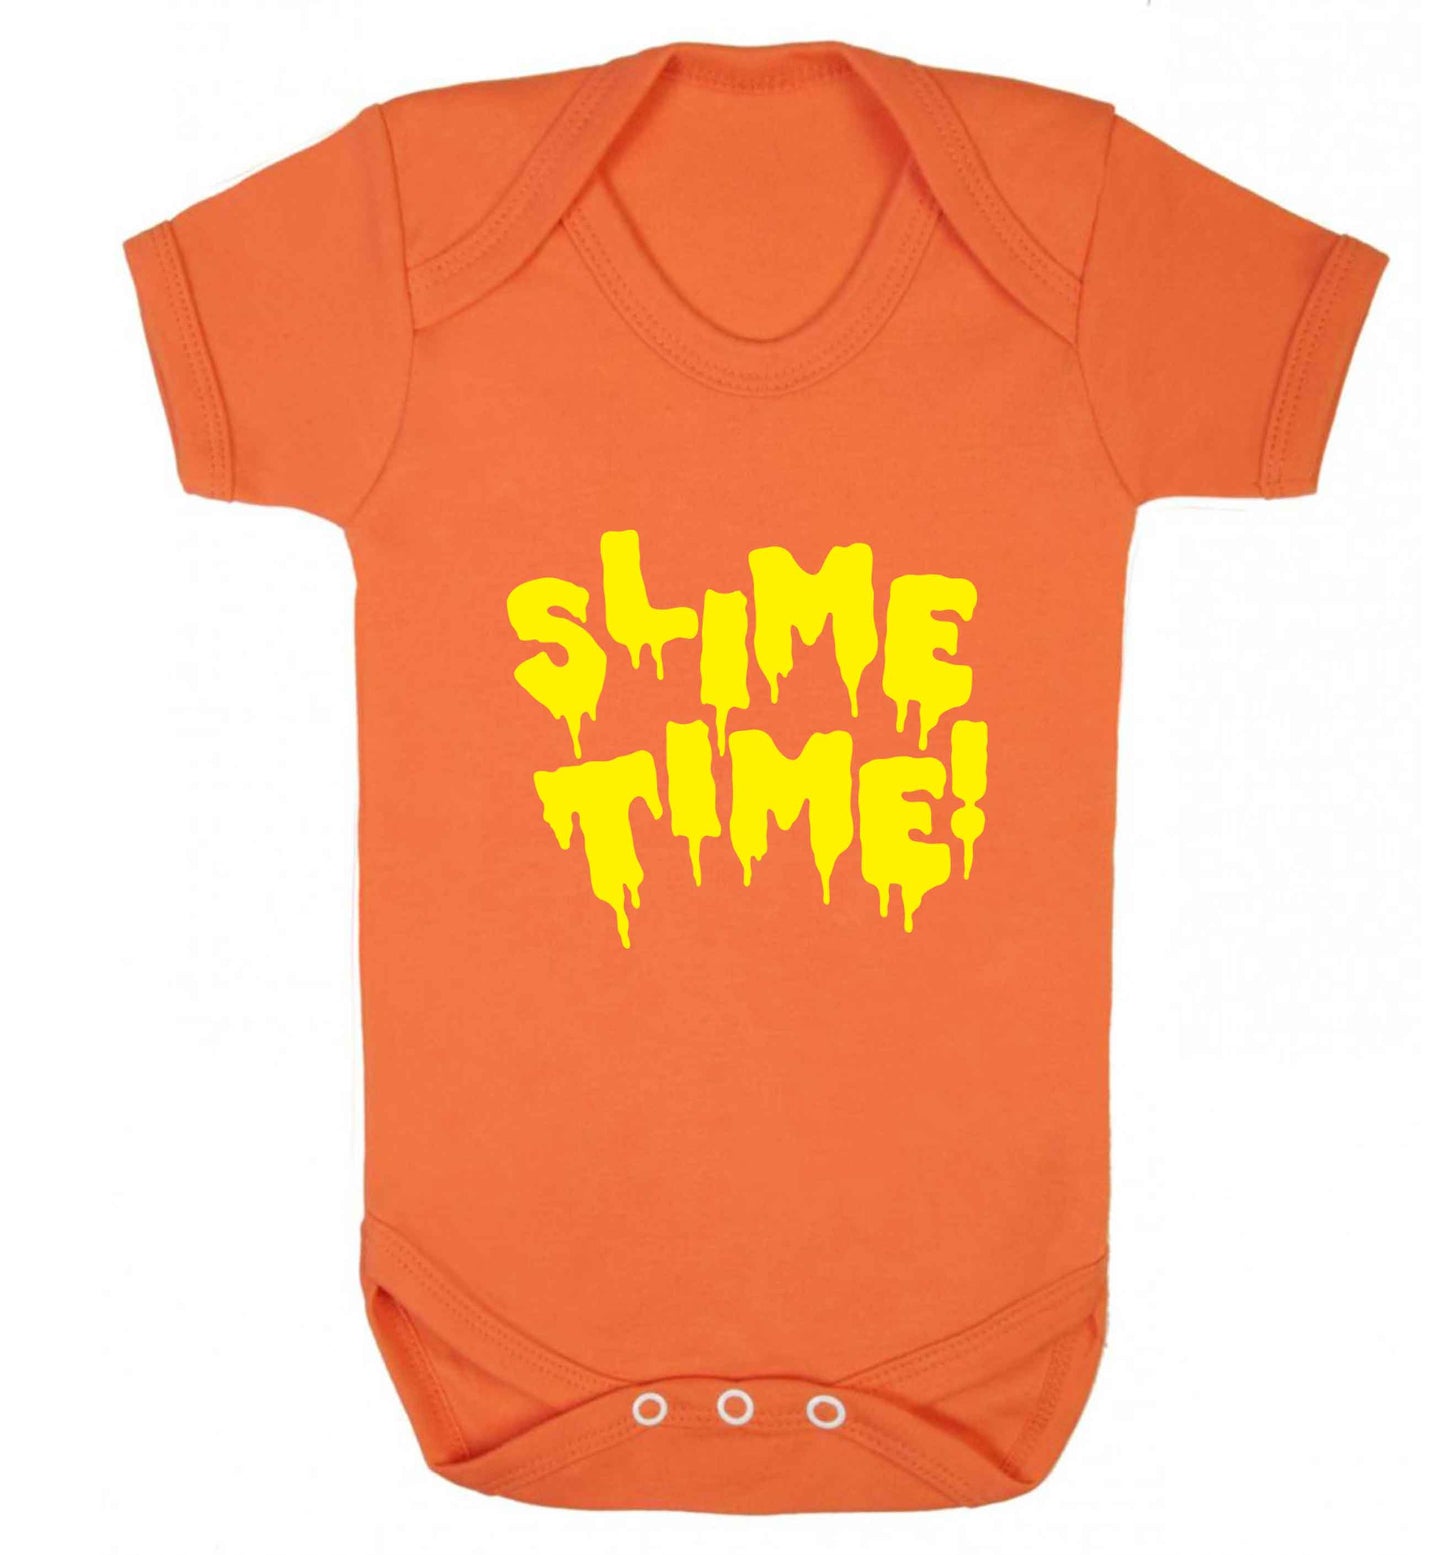 Neon yellow slime time baby vest orange 18-24 months